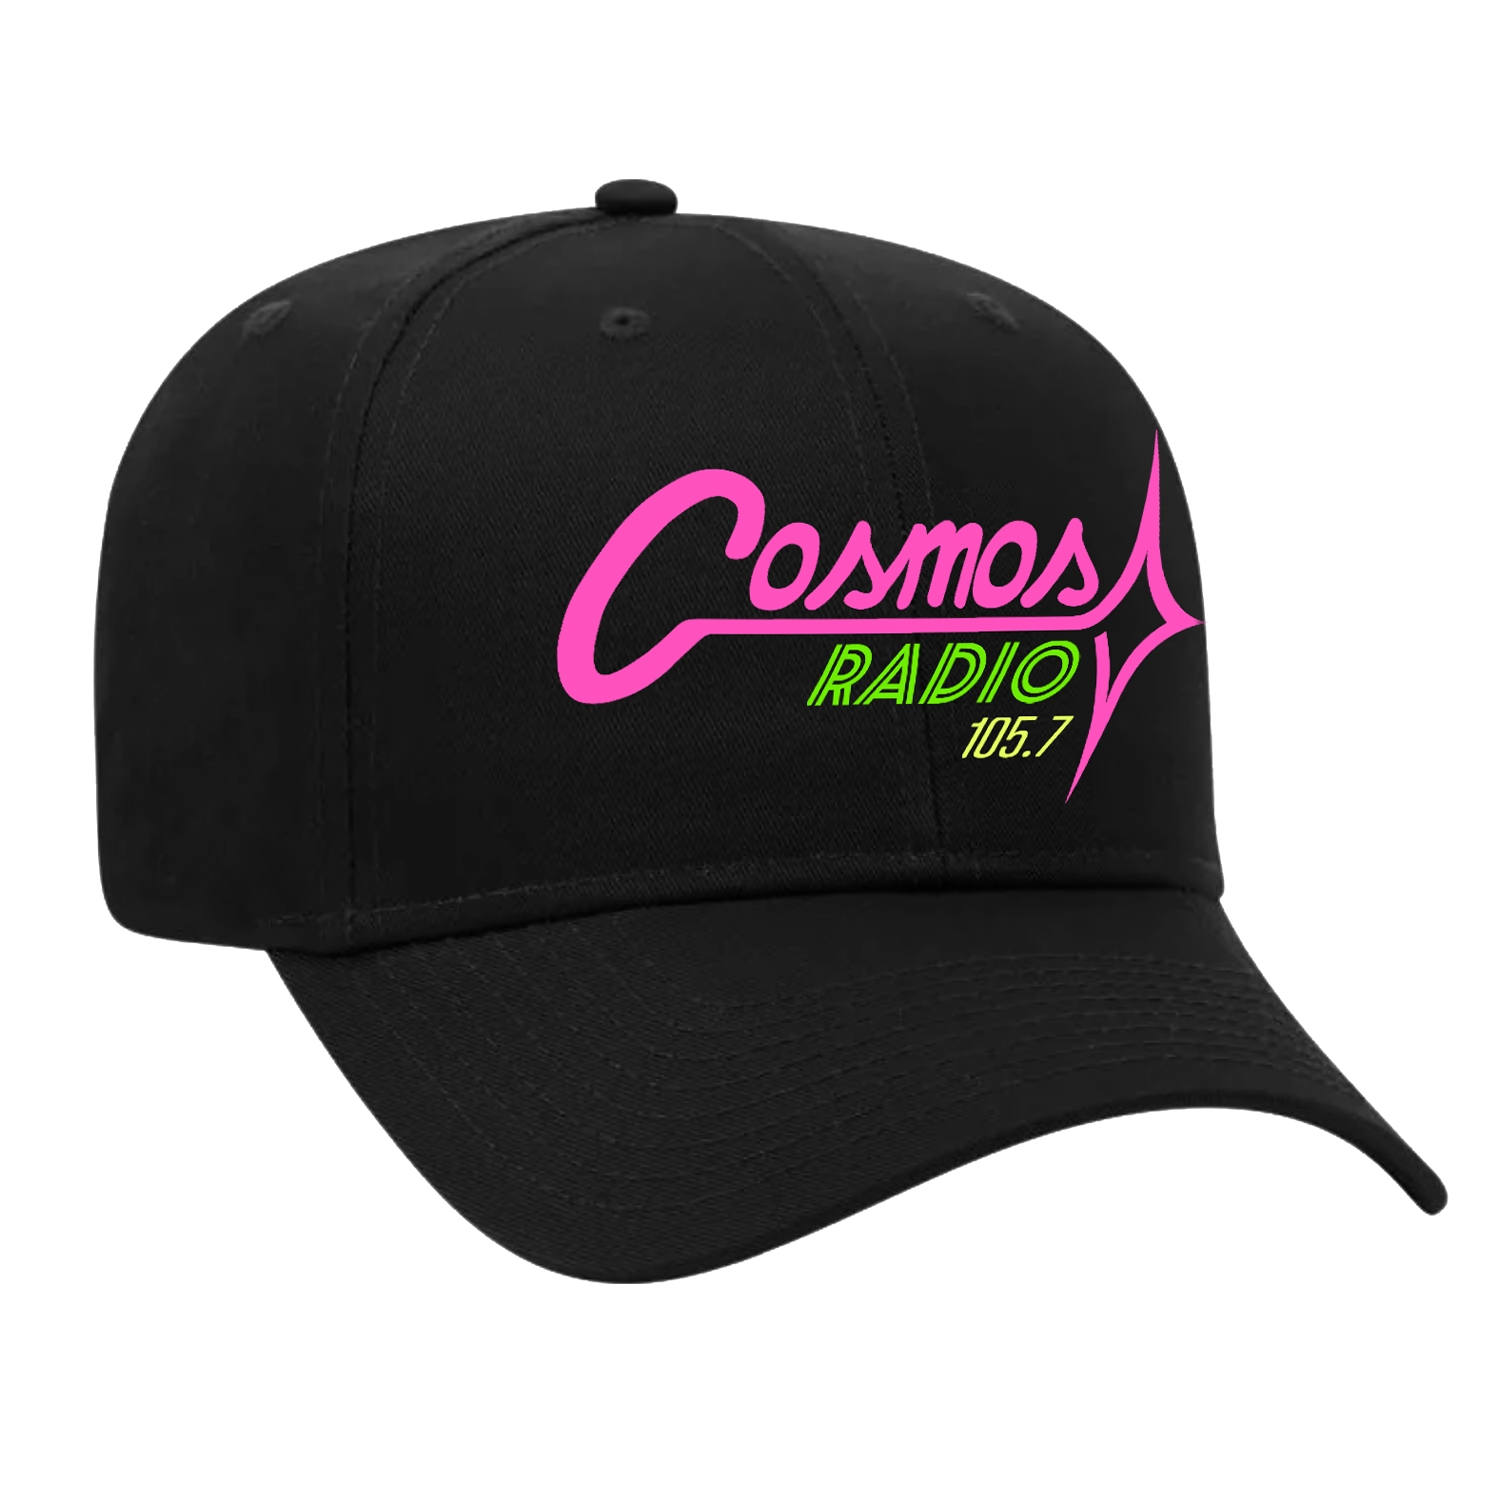 Doc D Cosmos 105.7 Hat